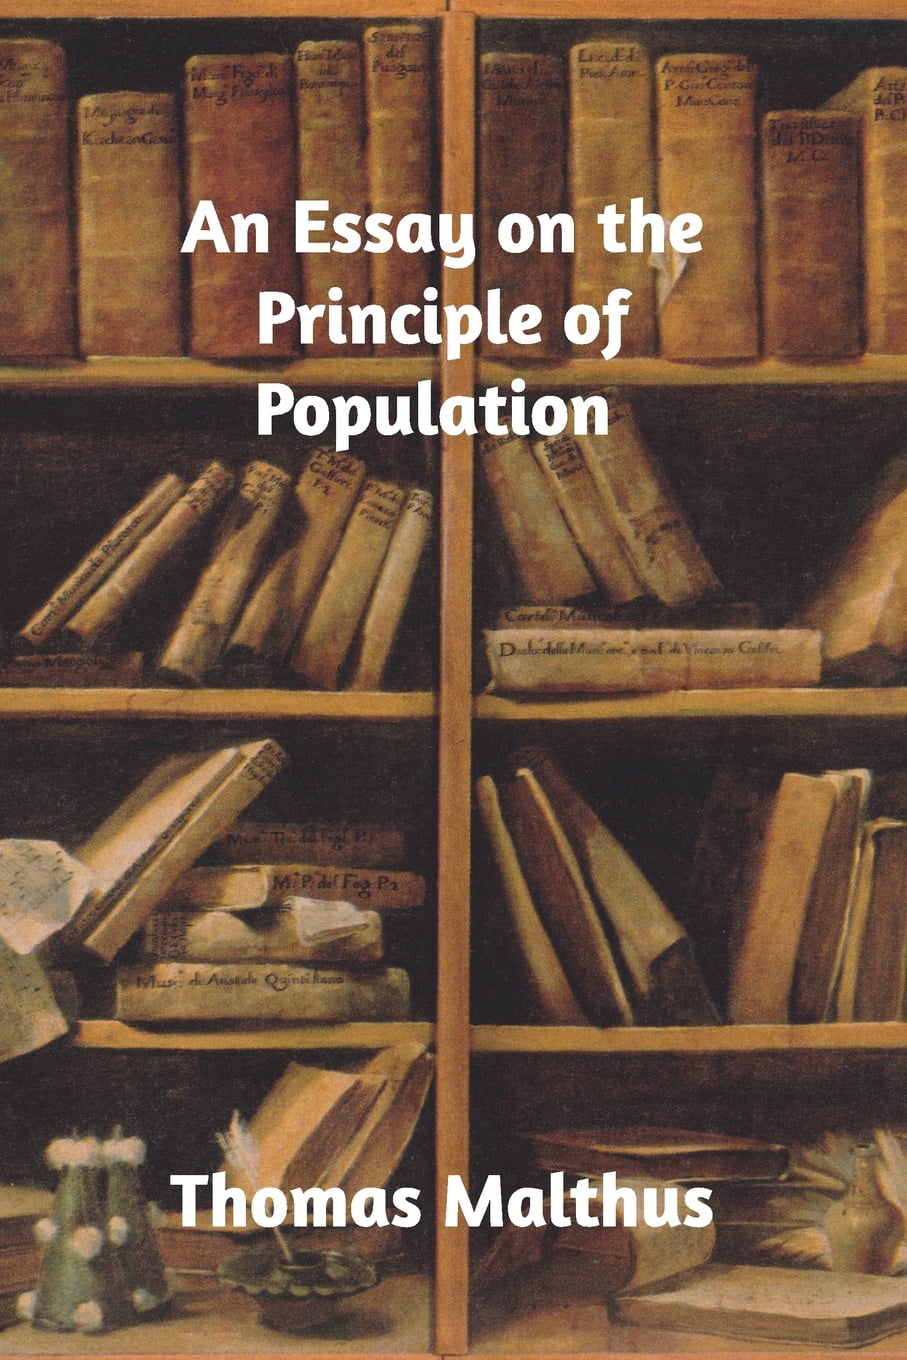 essay on the principle of population darwin